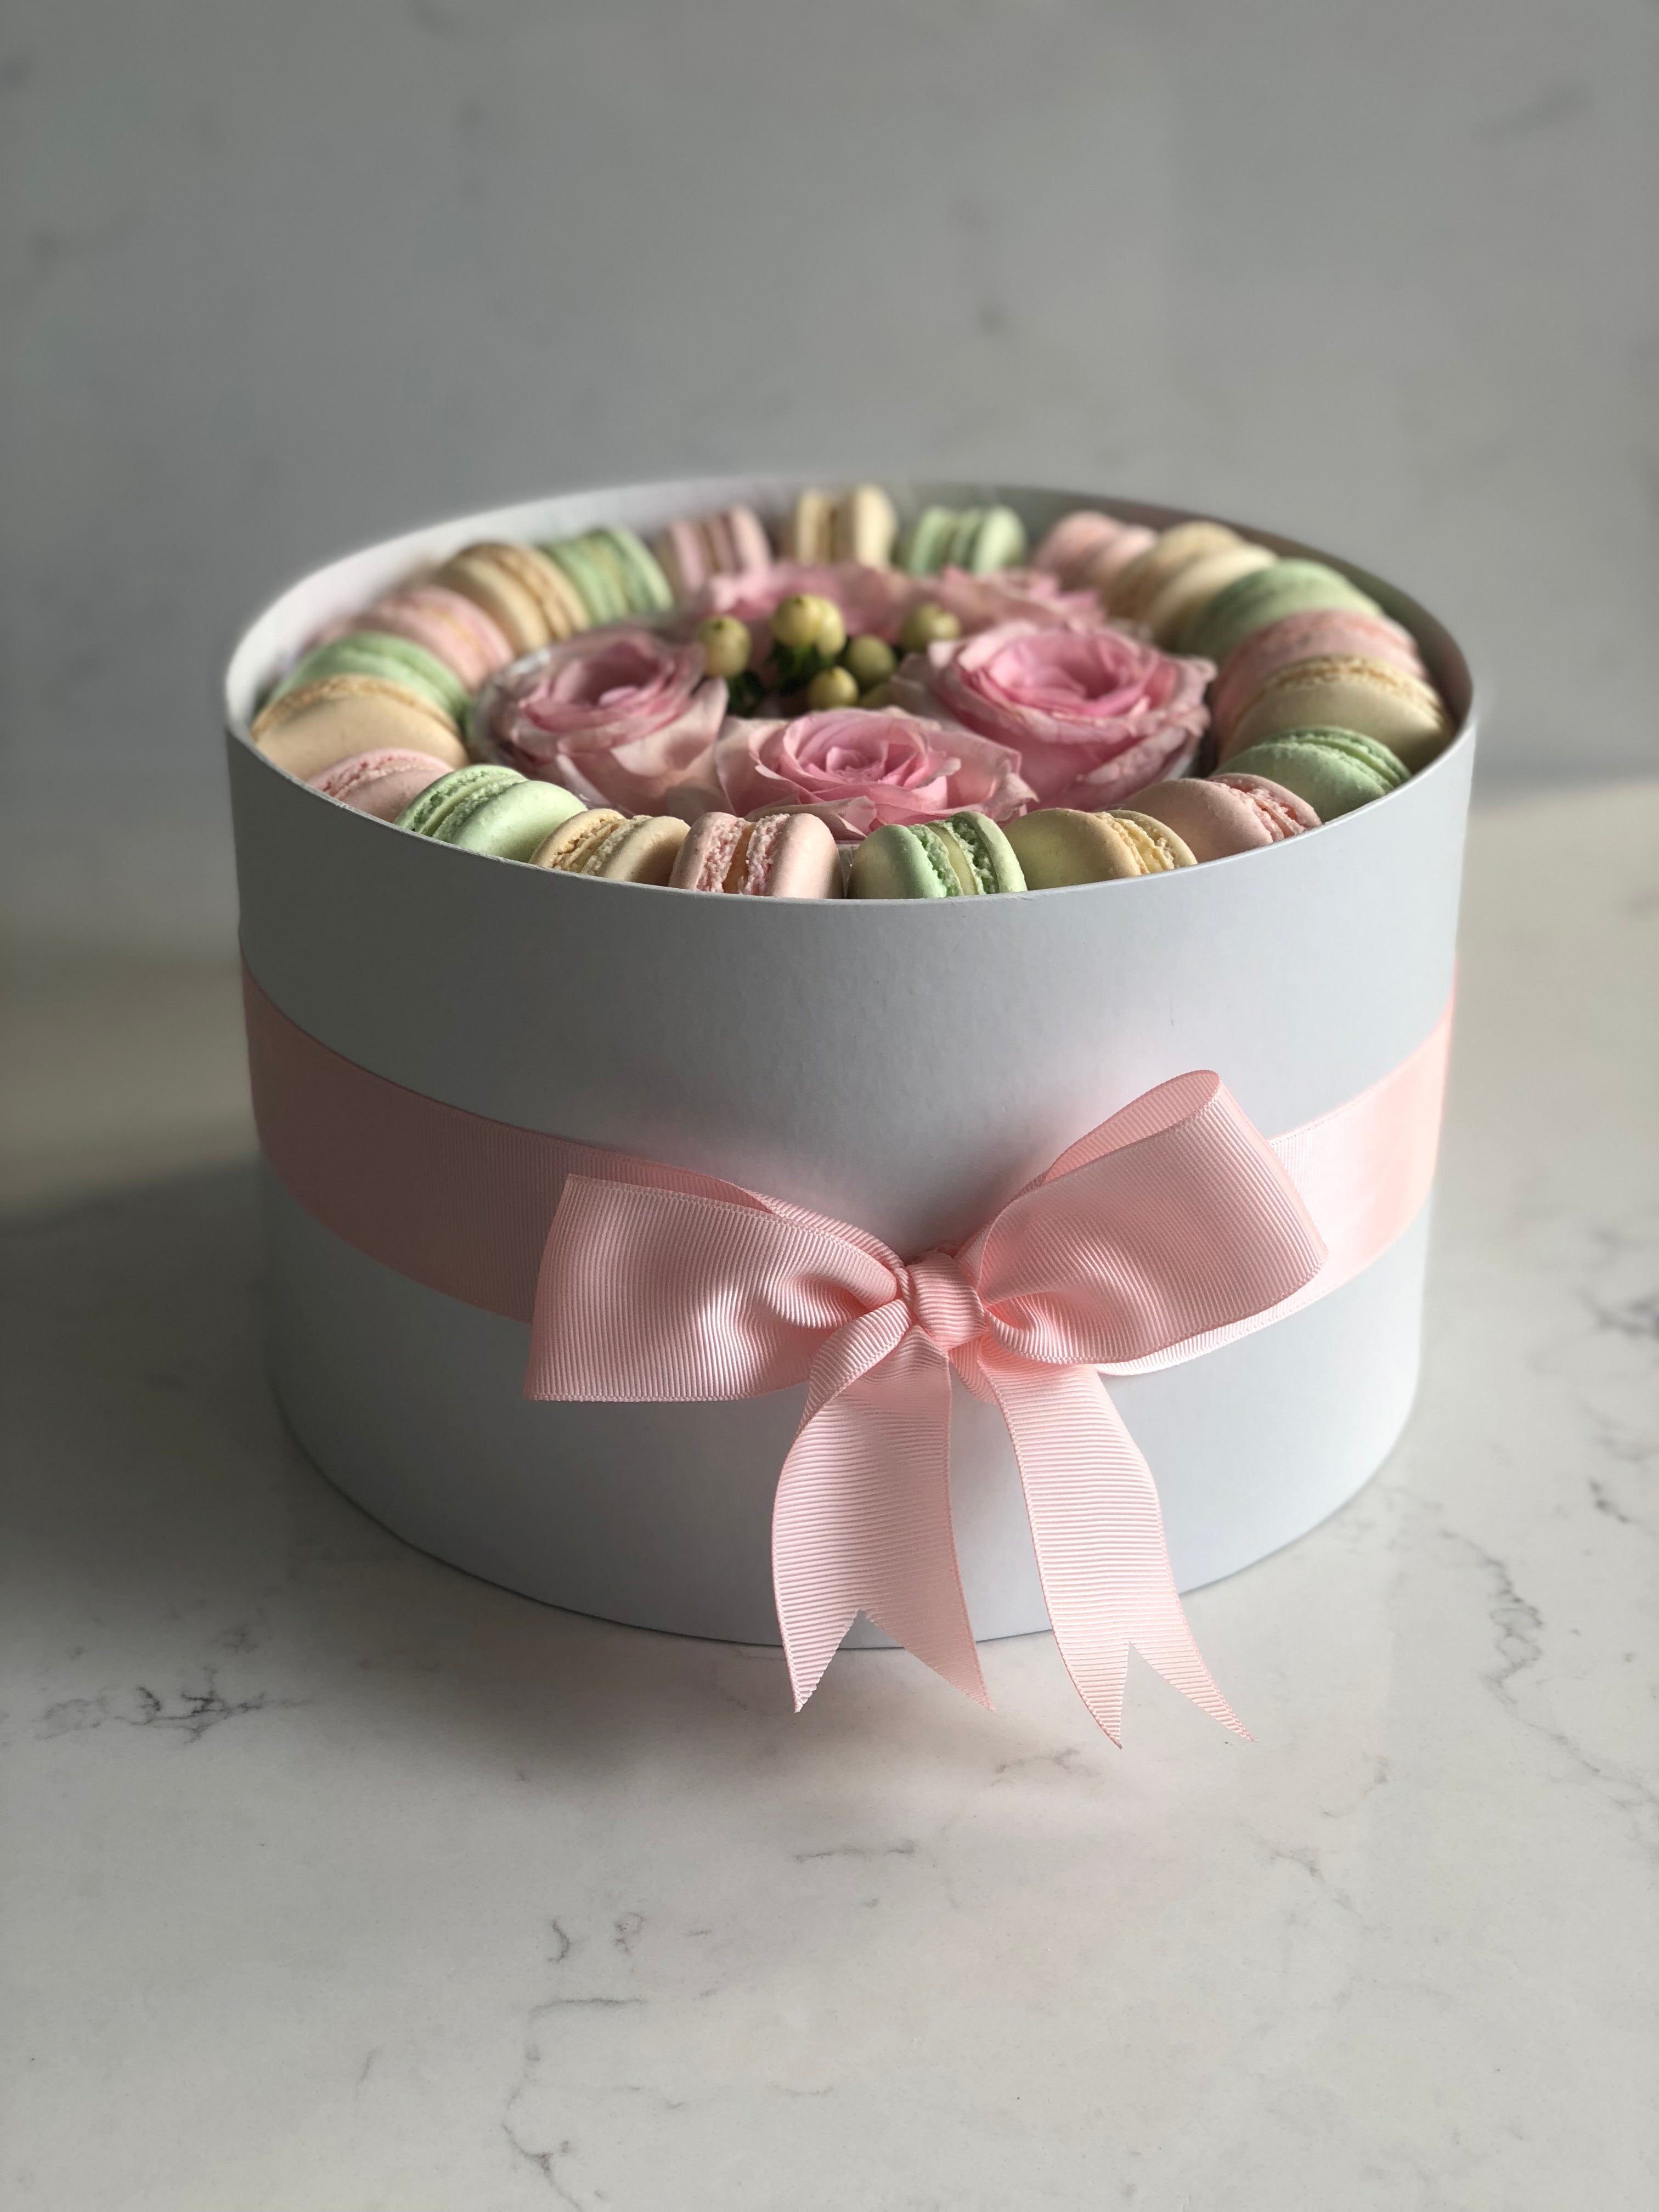 Pastel Dessert & Floral Gift Box